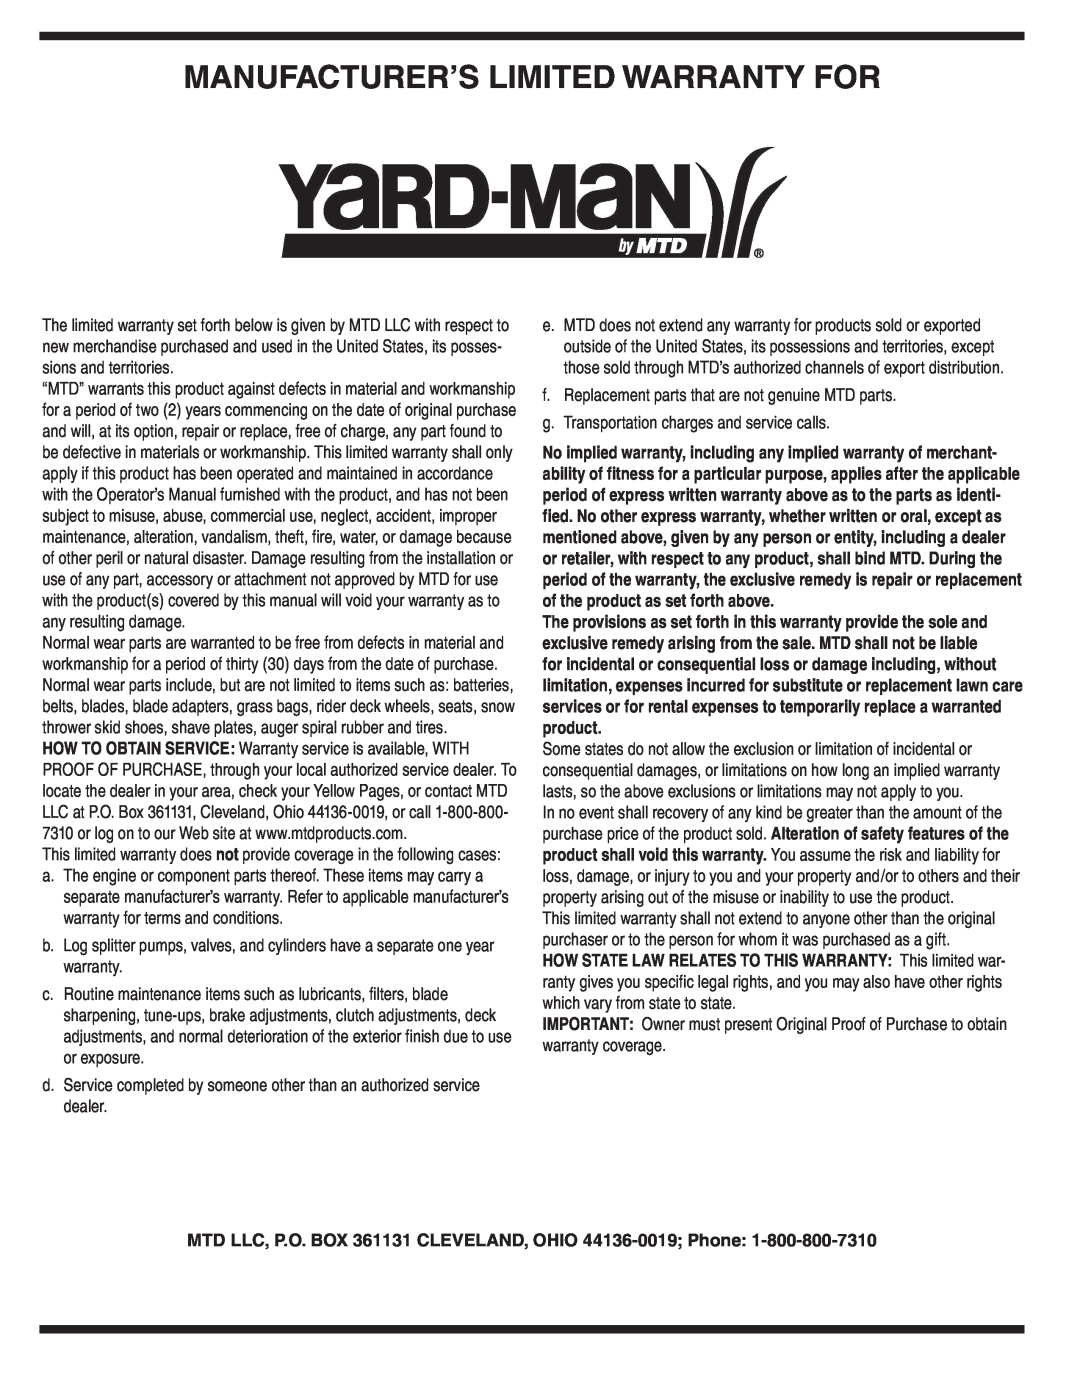 Yard-Man 263 warranty Manufacturer’S Limited Warranty For, MTD LLC, P.O. BOX 361131 CLEVELAND, OHIO 44136-0019 Phone 